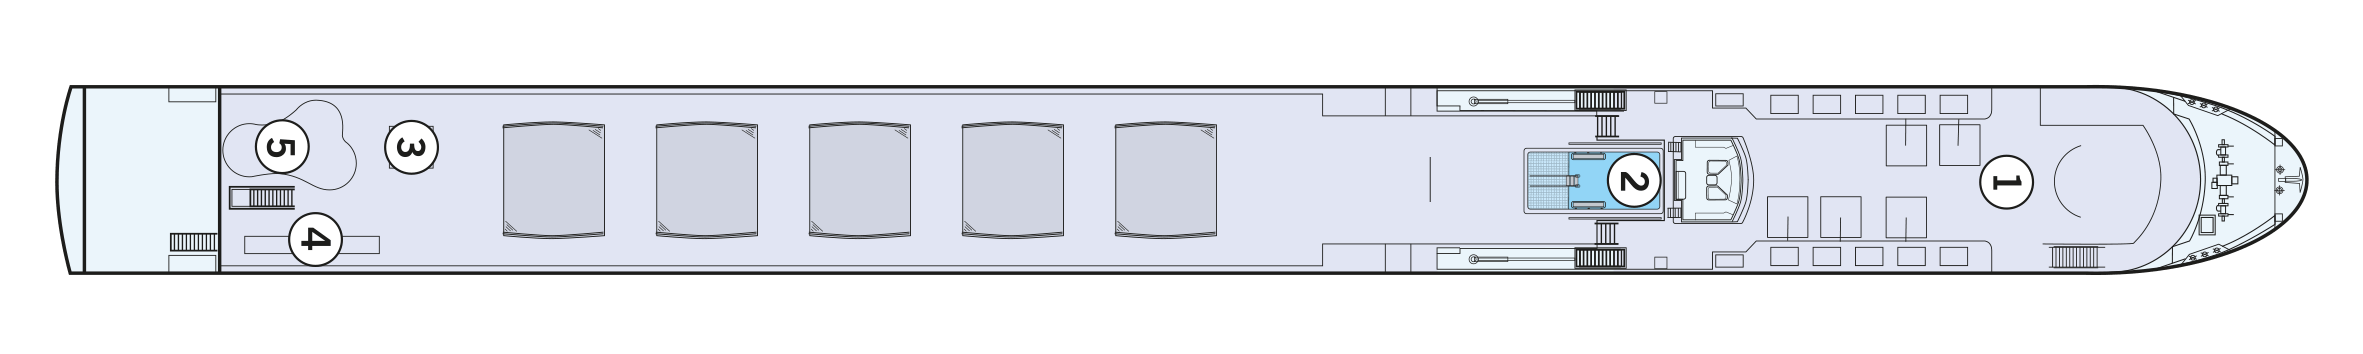 MS Amadeus Nova - Amadeus Flusskreuzfahrten - Deck 4 (Deck 4)